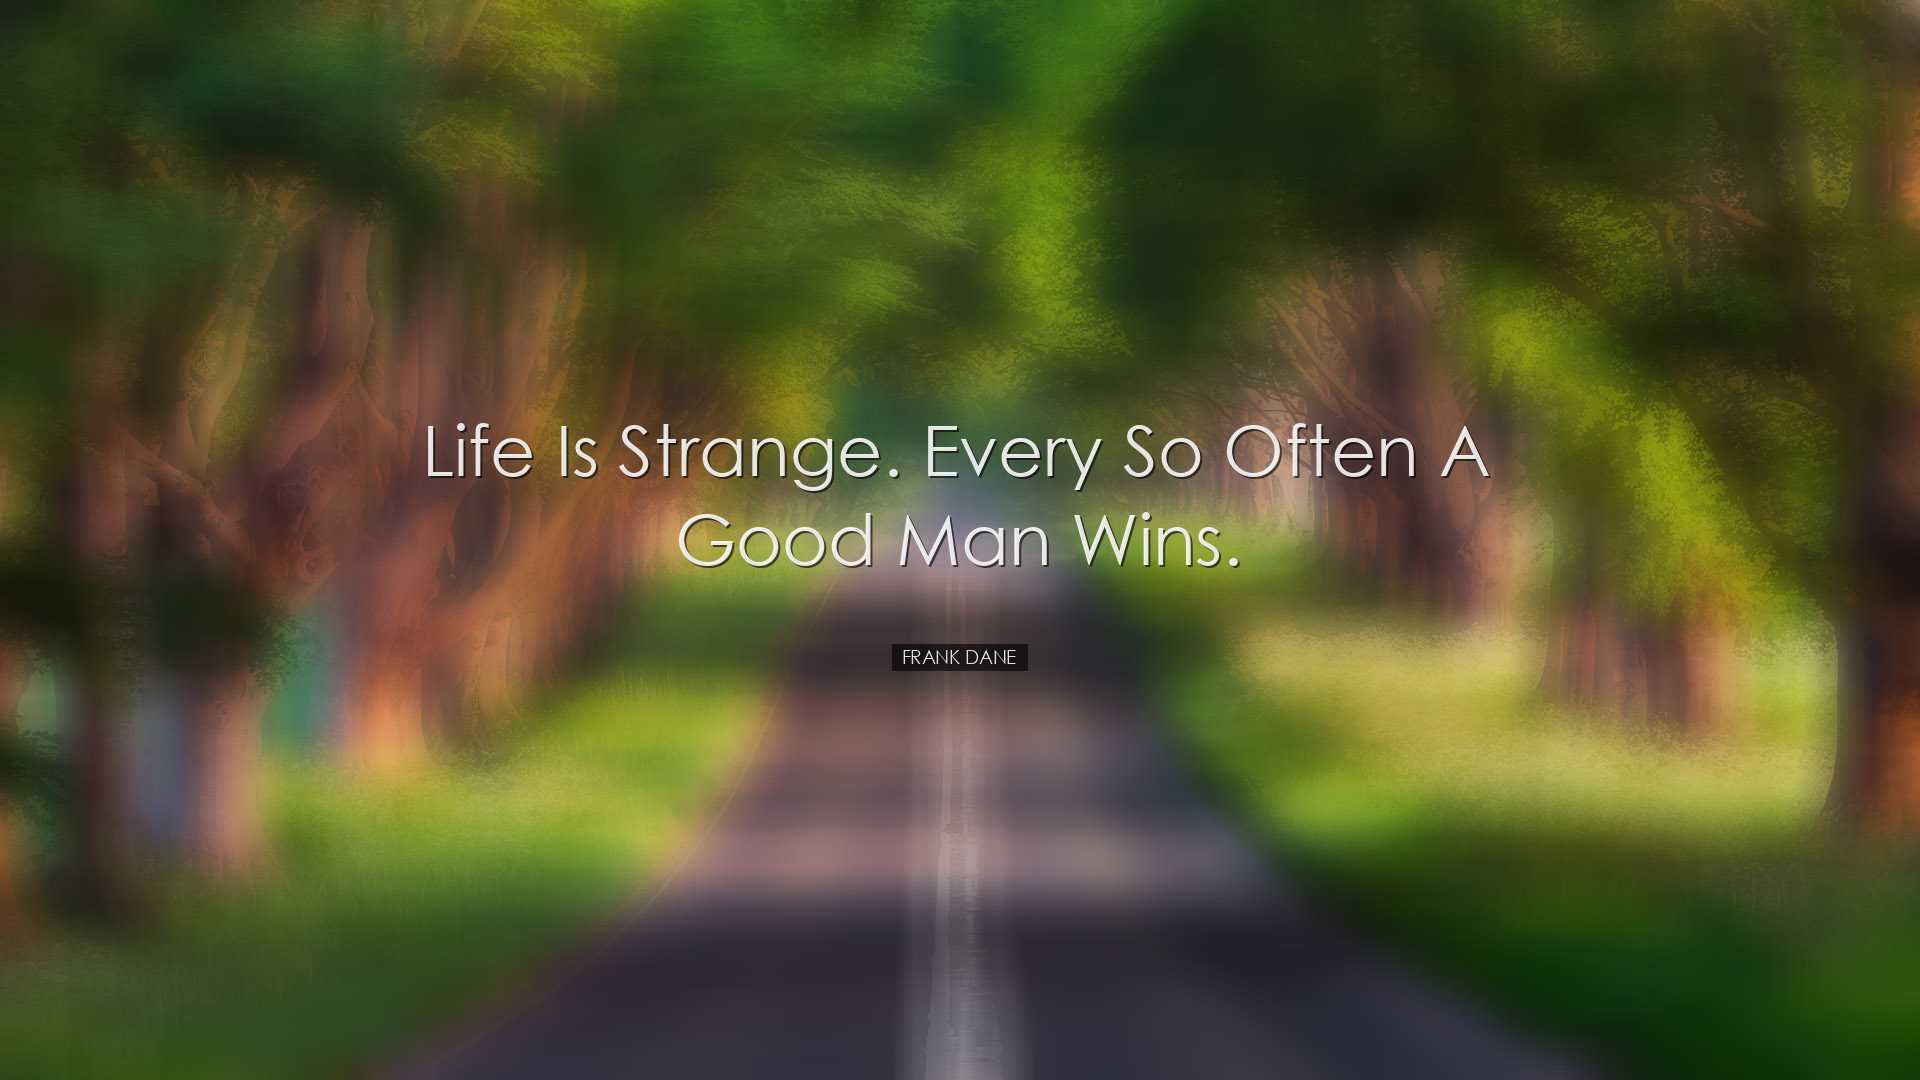 Life is strange. Every so often a good man wins. - Frank Dane